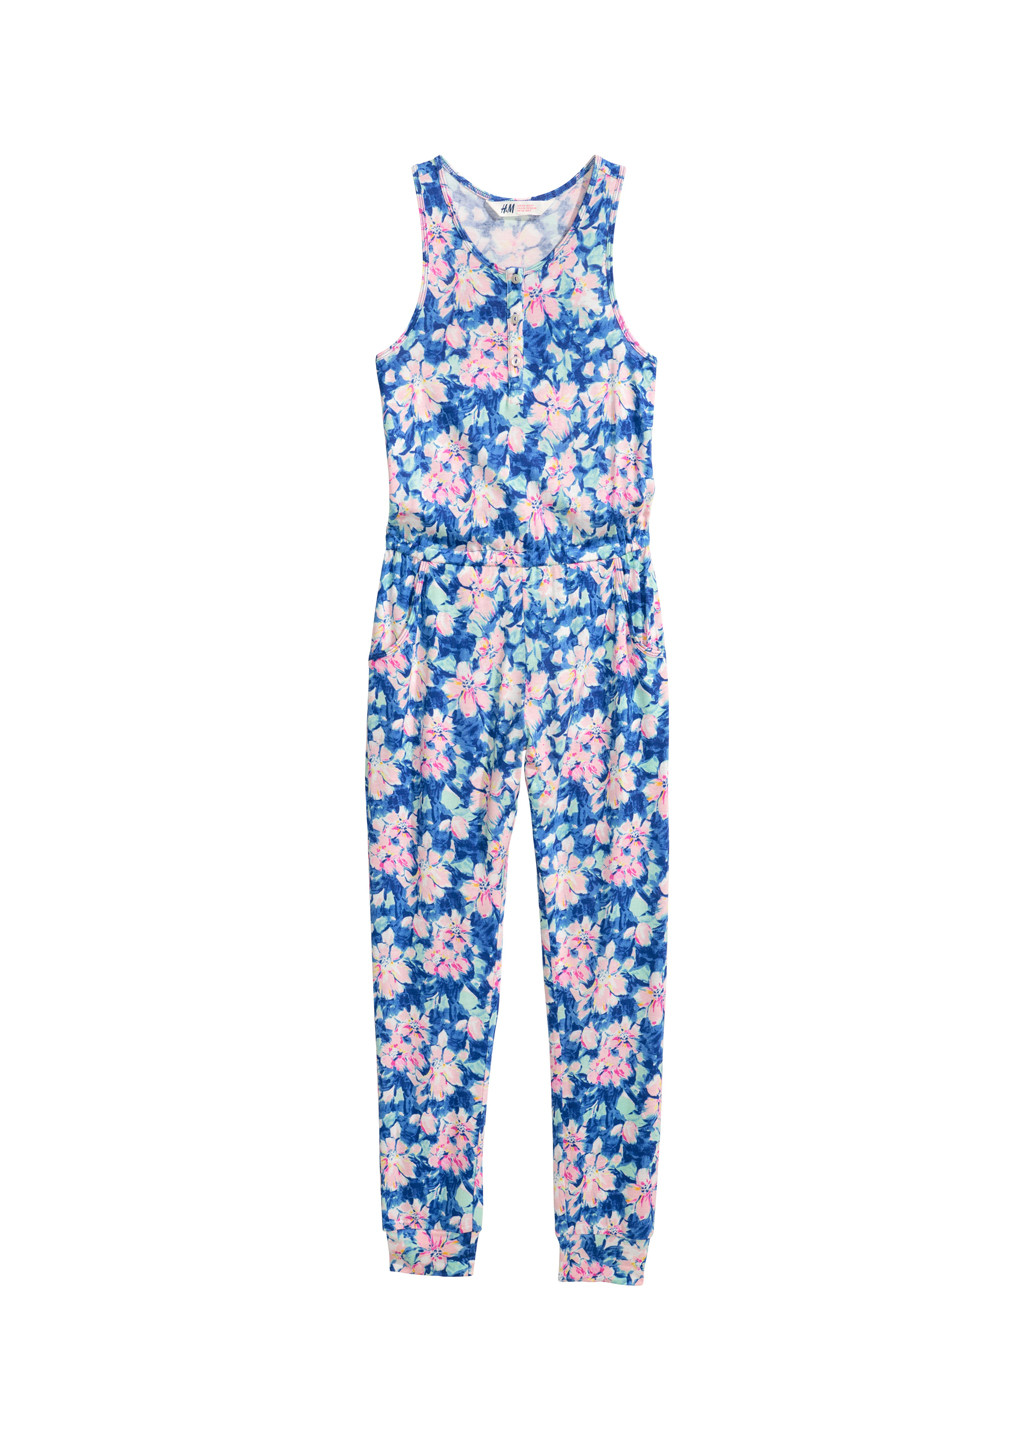 Комбинезон H&M комбинезон-брюки цветочный синий кэжуал вискоза